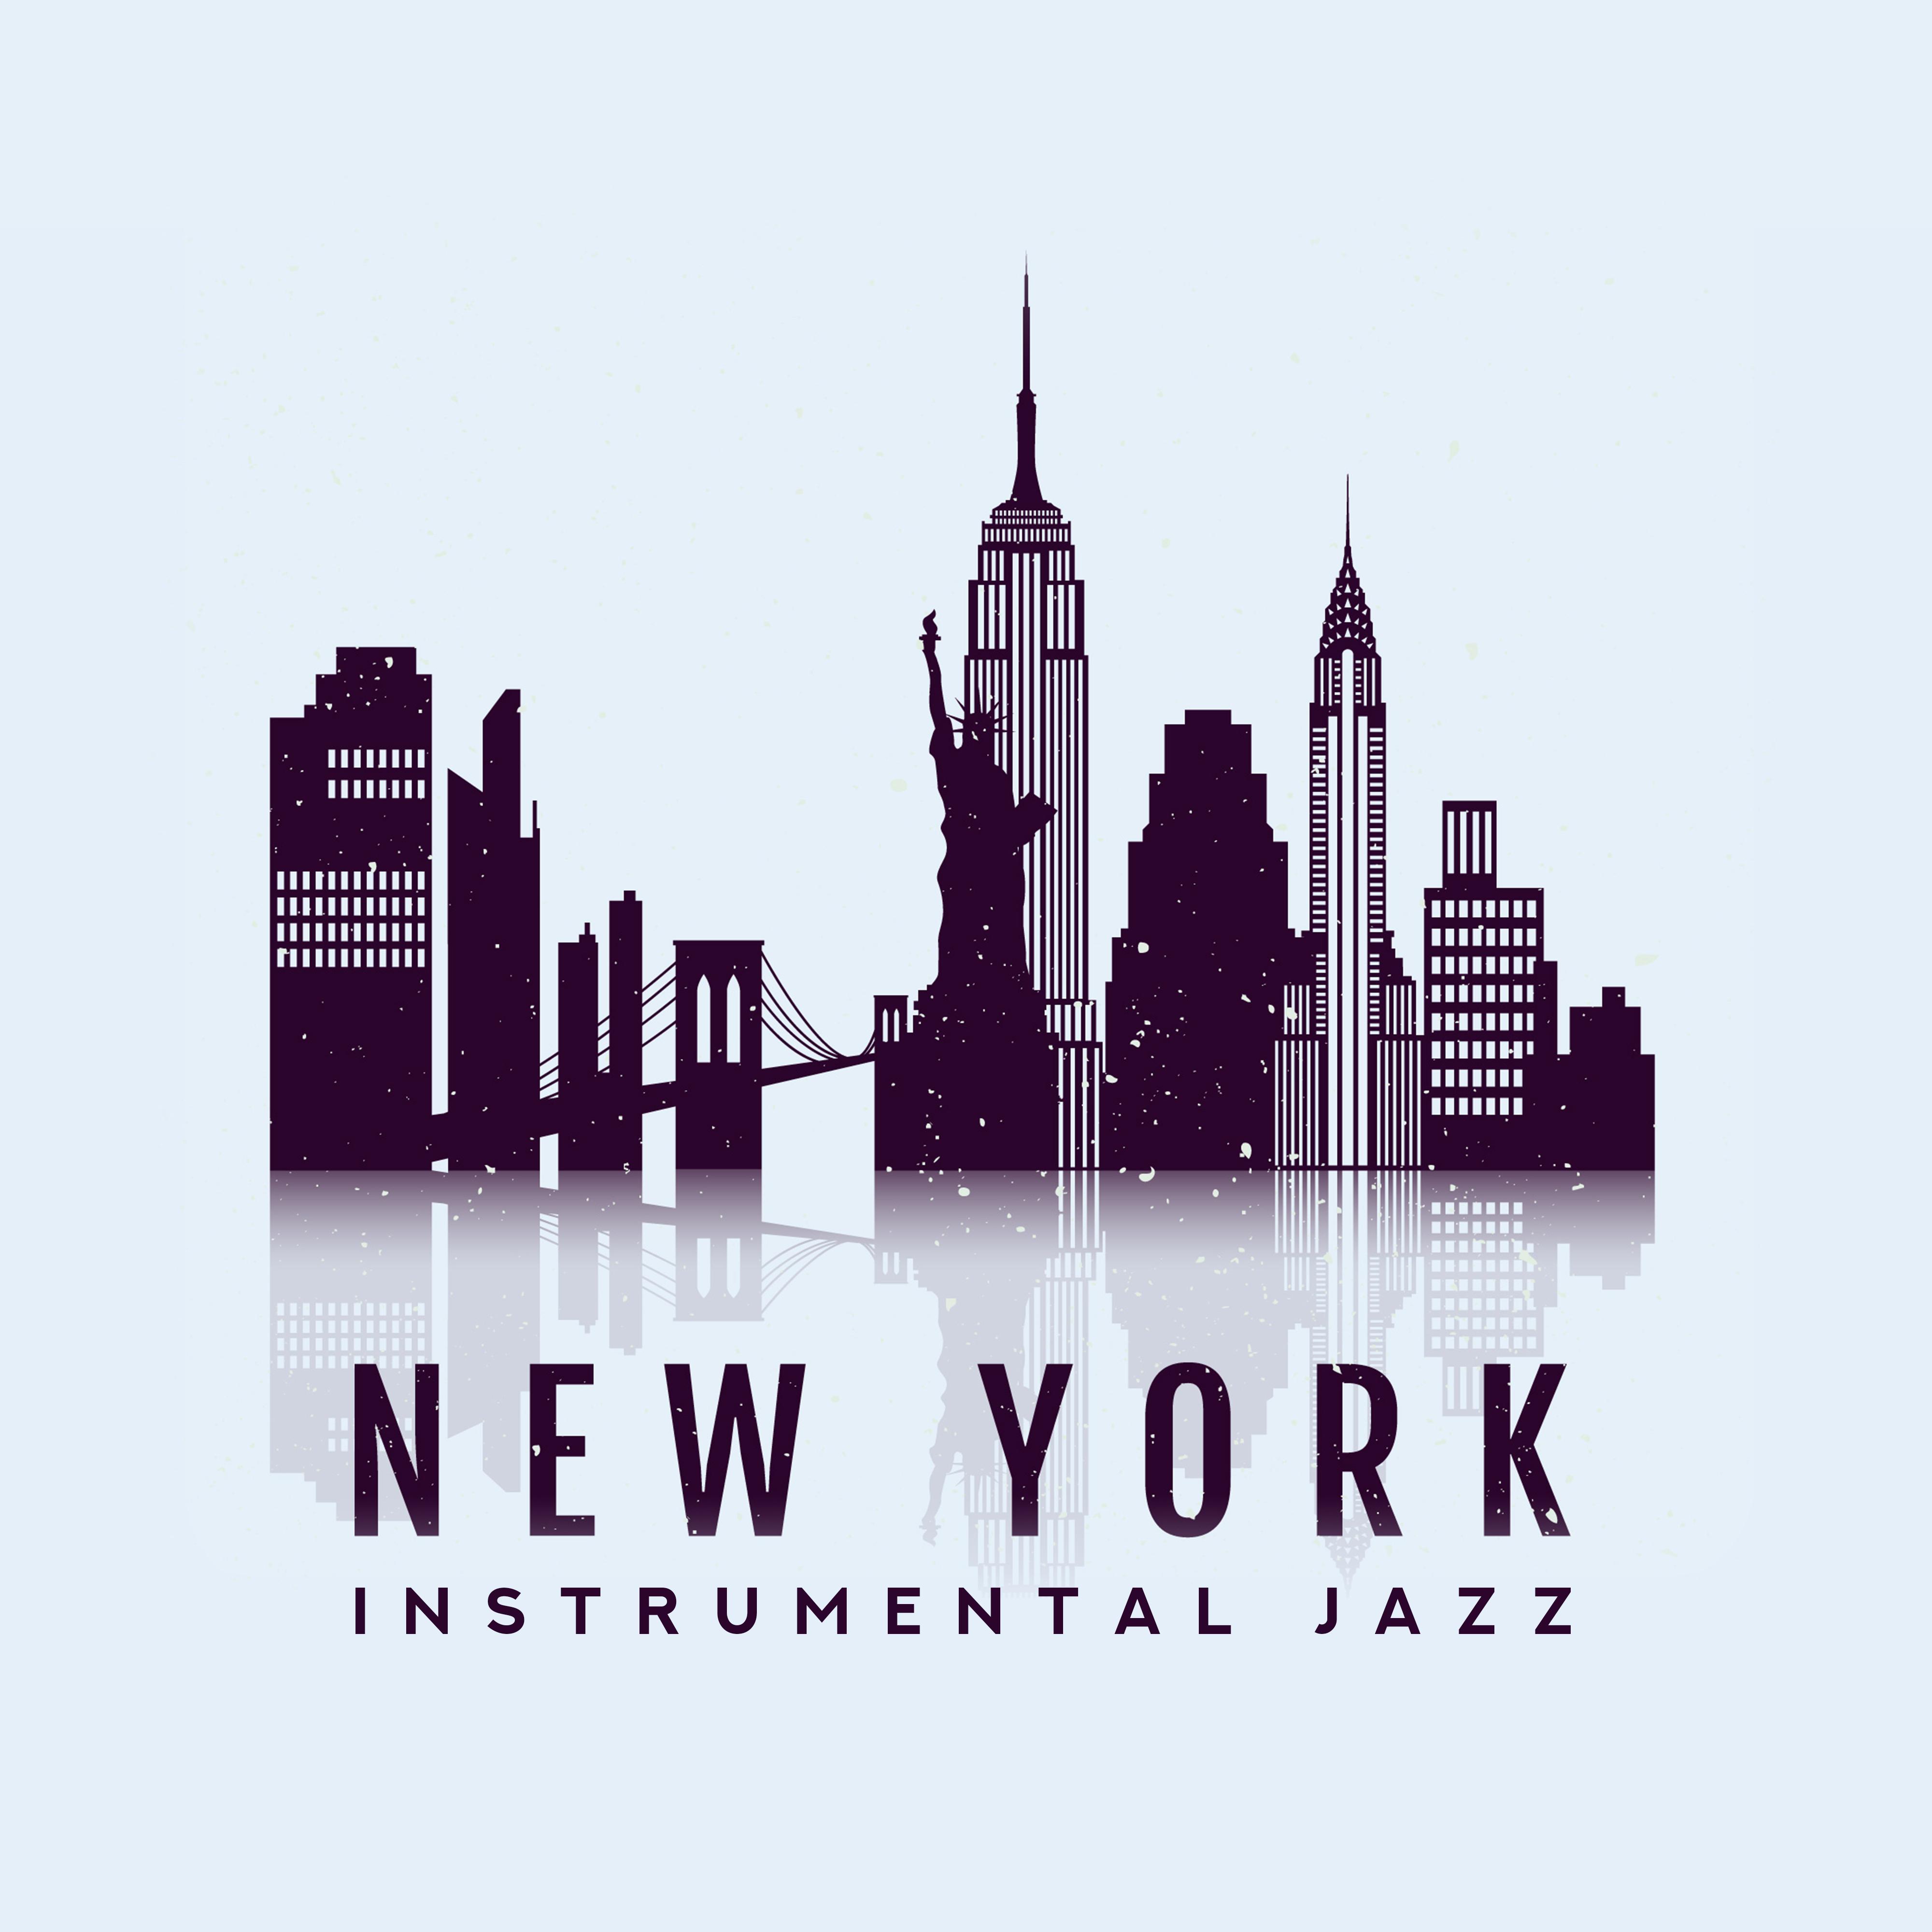 New York Instrumental Jazz - Music of Underground Jazz Clubs, Piano Bars and Exquisite Restaurants